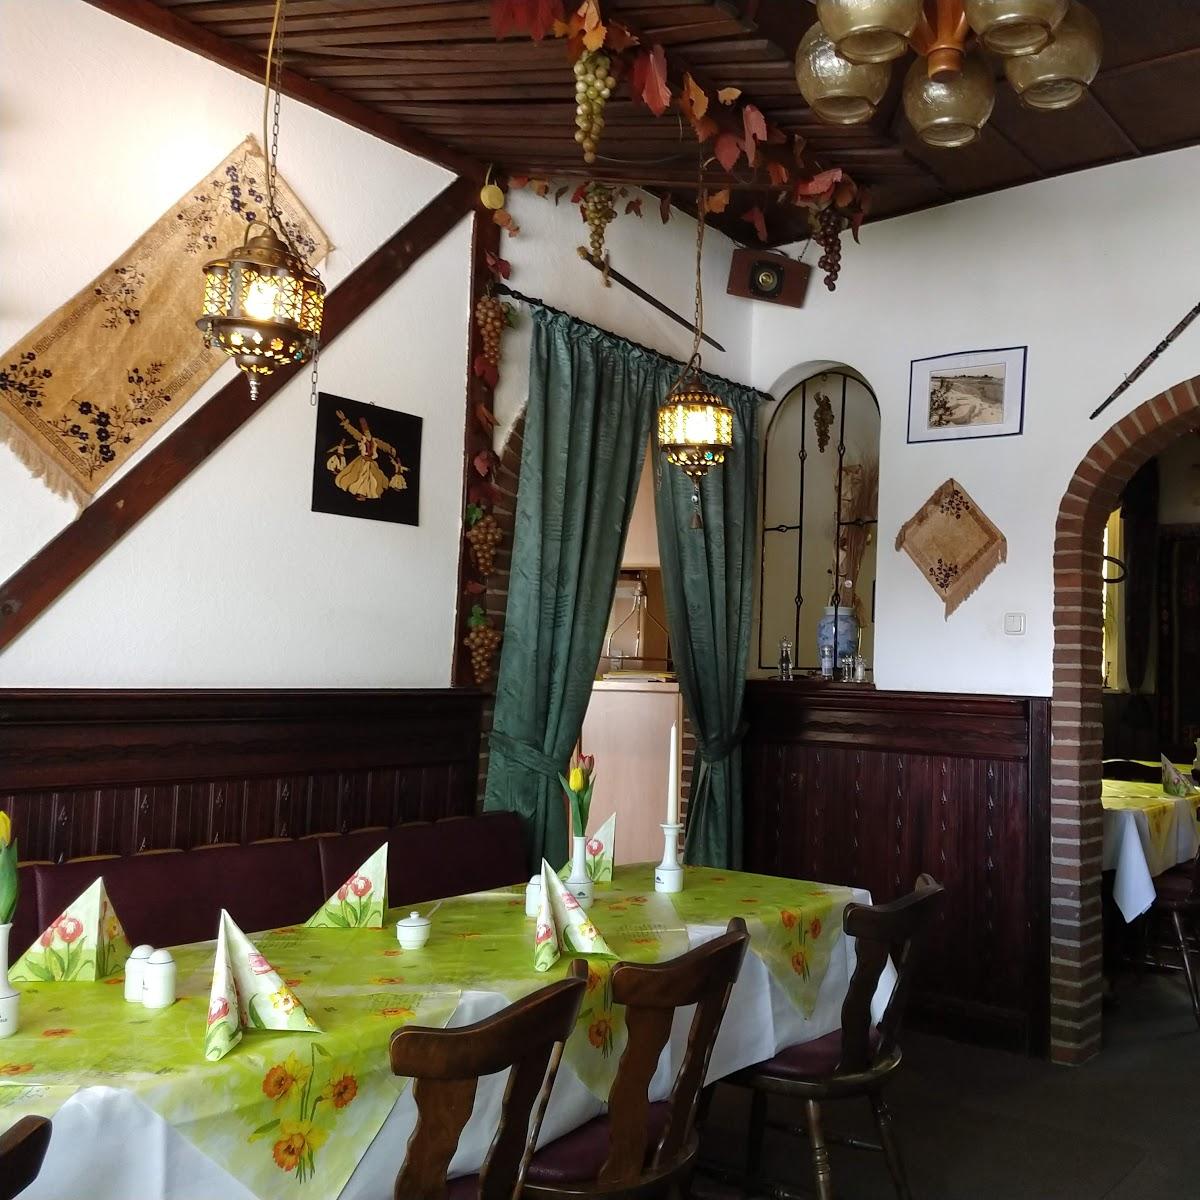 Restaurant "Pamukkale" in Mölln